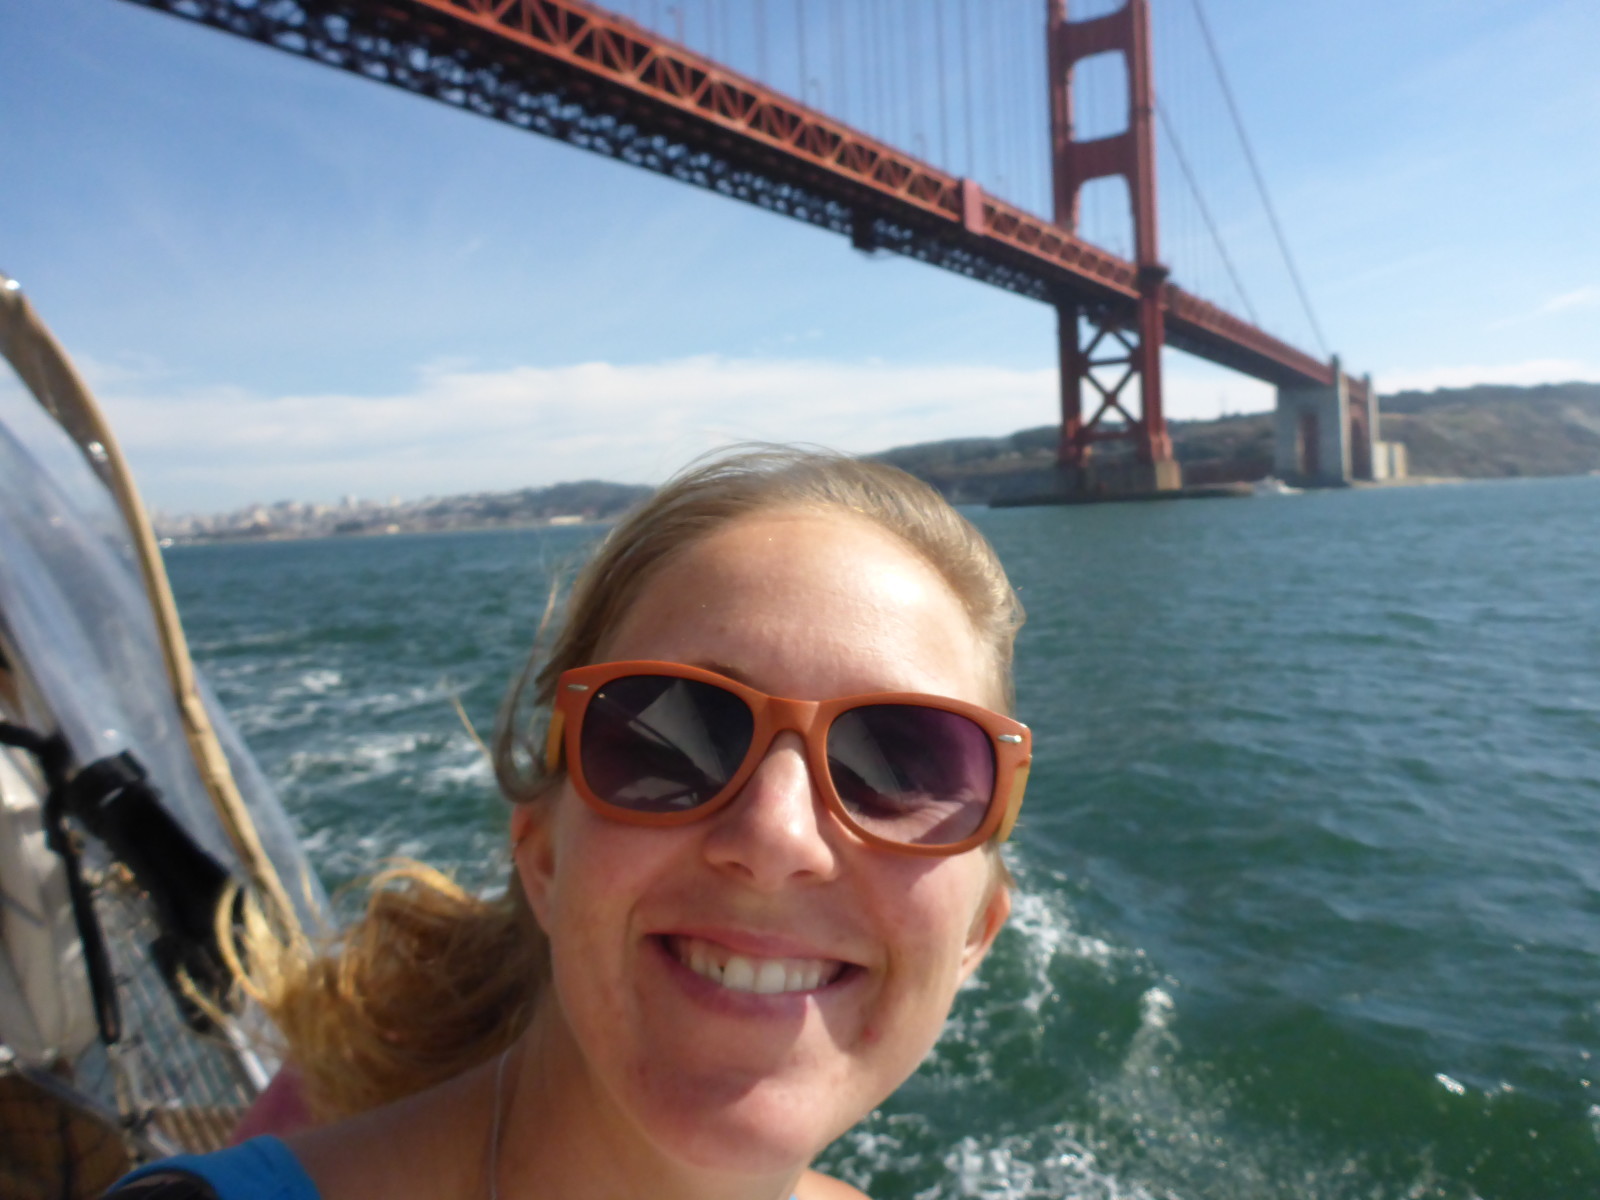 Bye to the Golden Gate Bridge